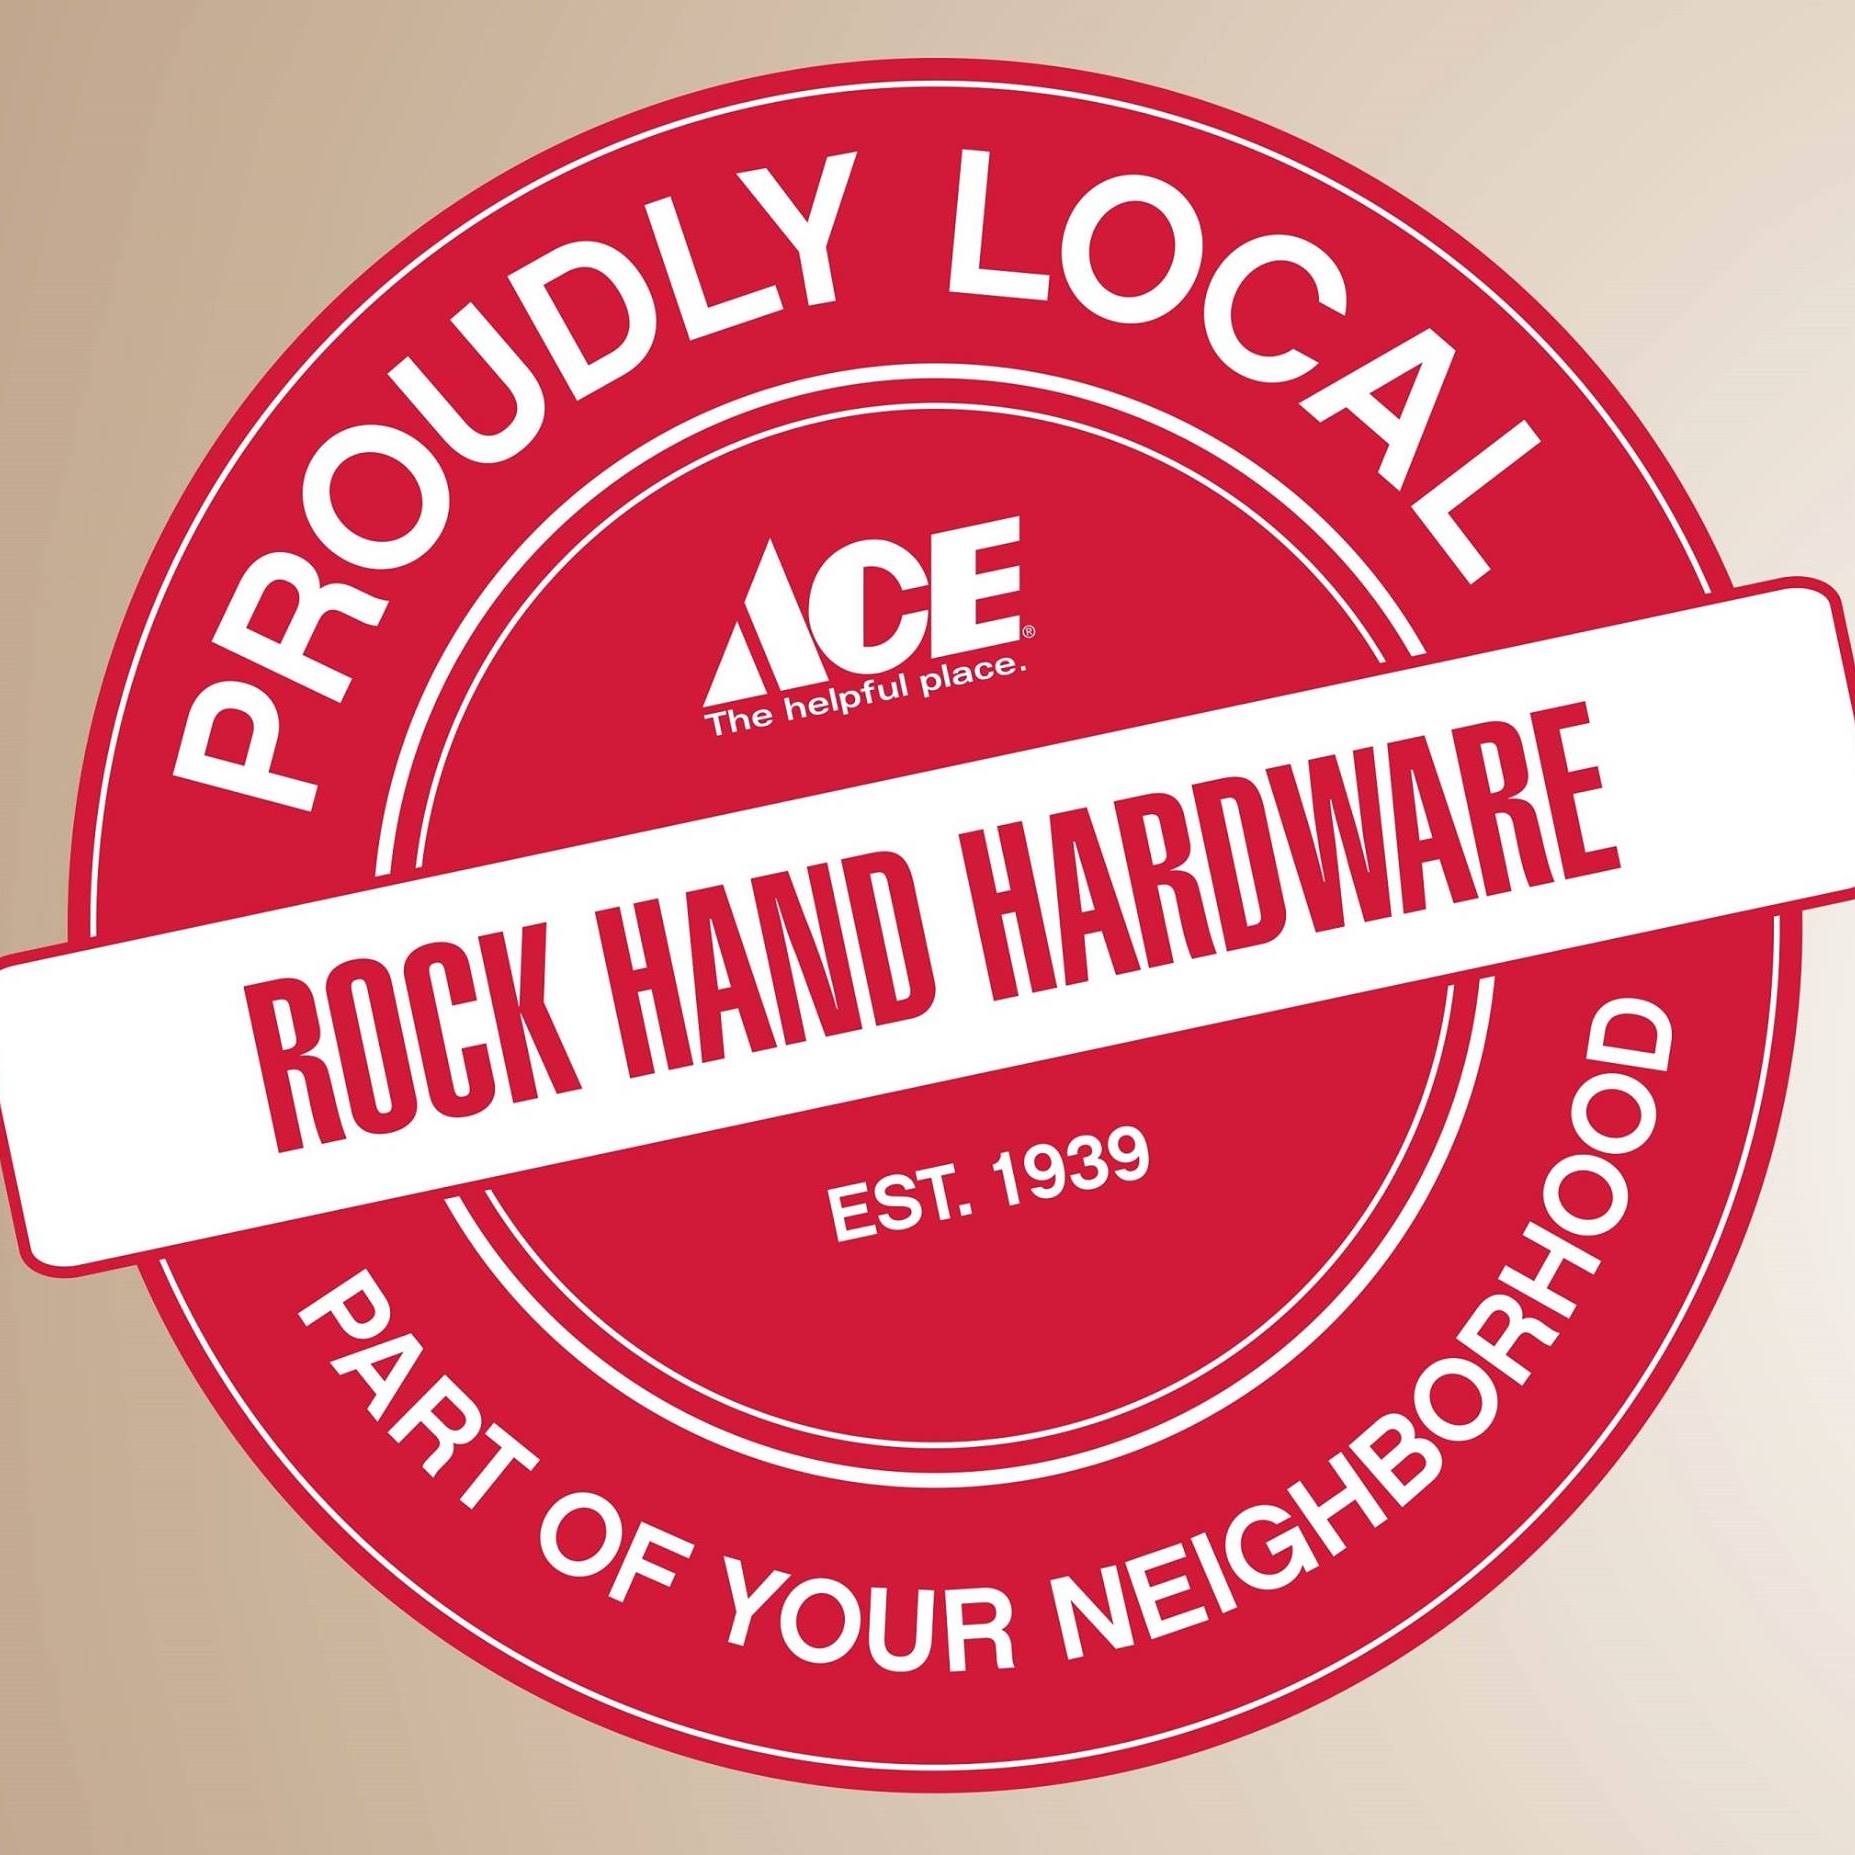 Rock Hand Hardware